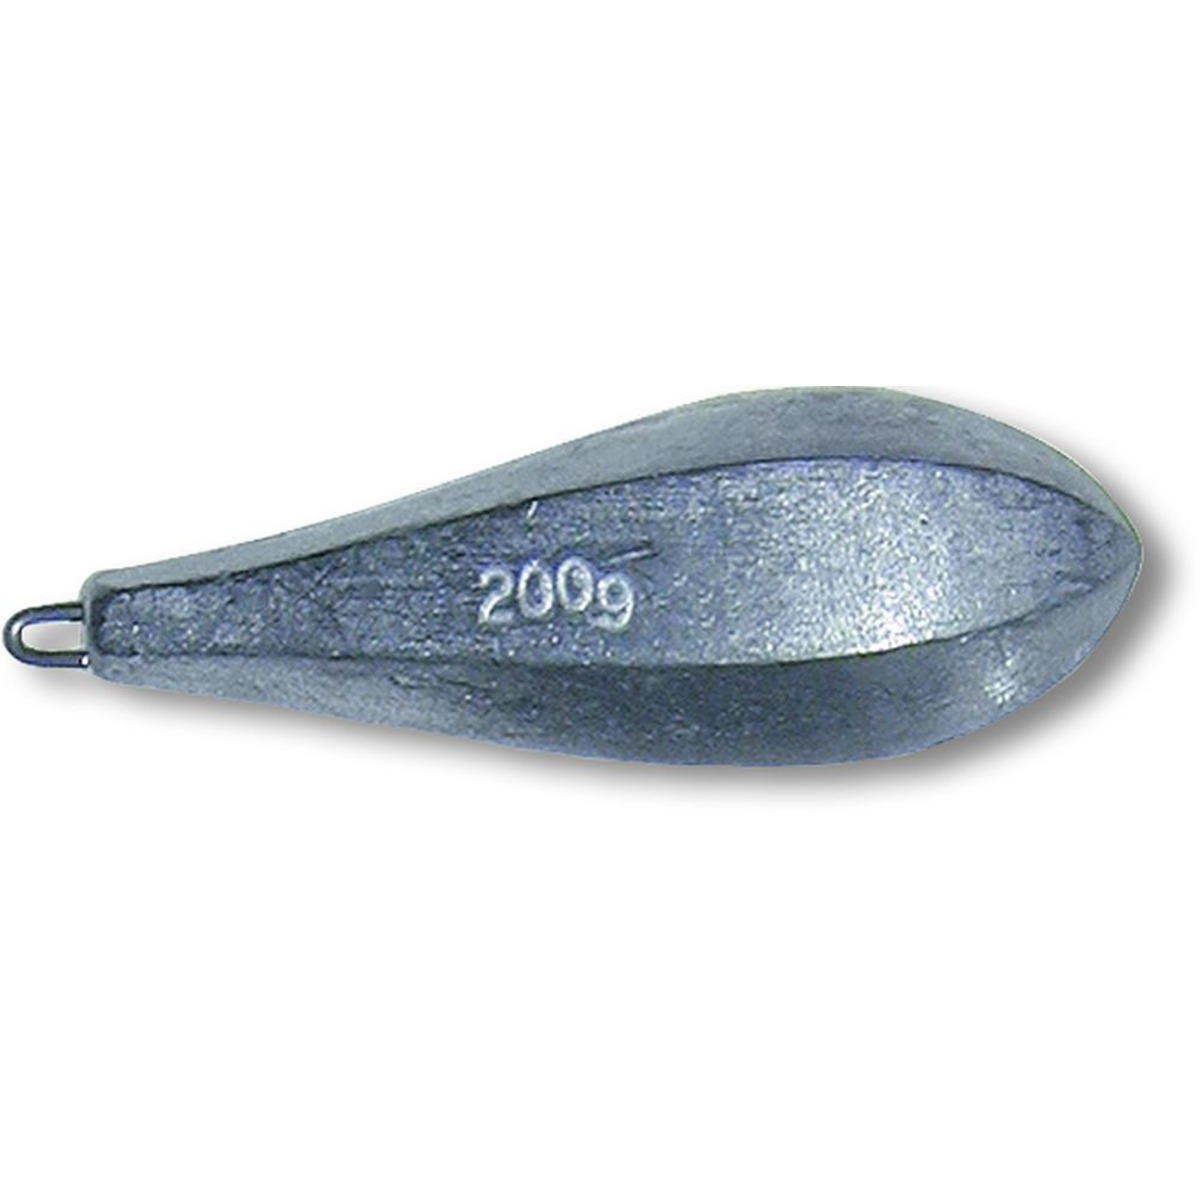 Zebco Z-sea Surf Lead - 160 g